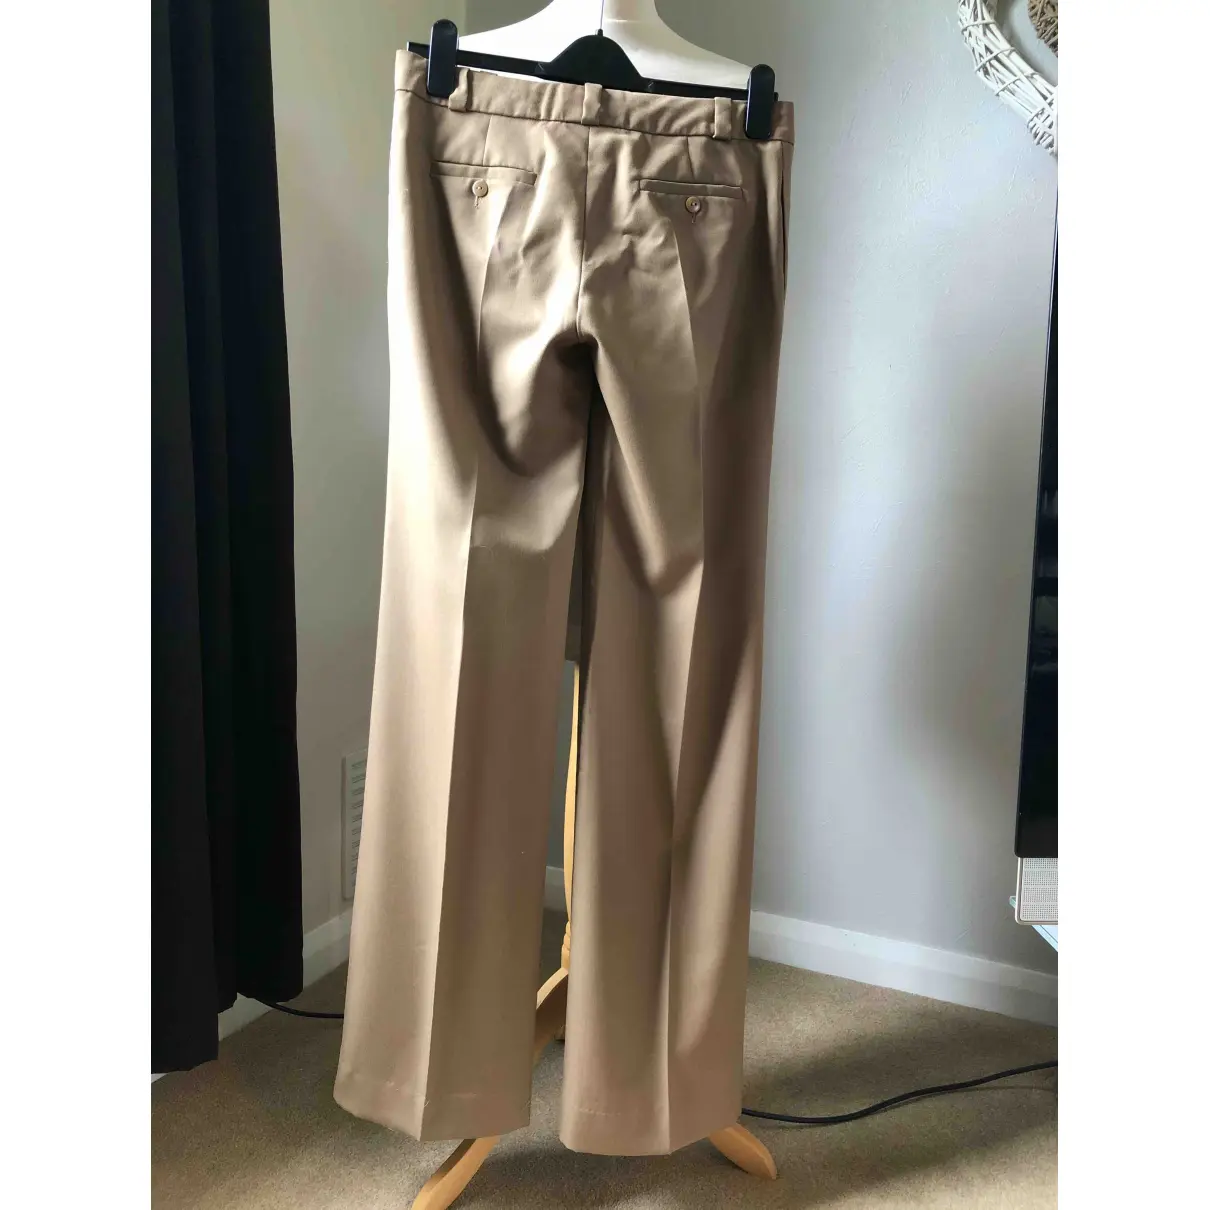 Buy Chloé Wool trousers online